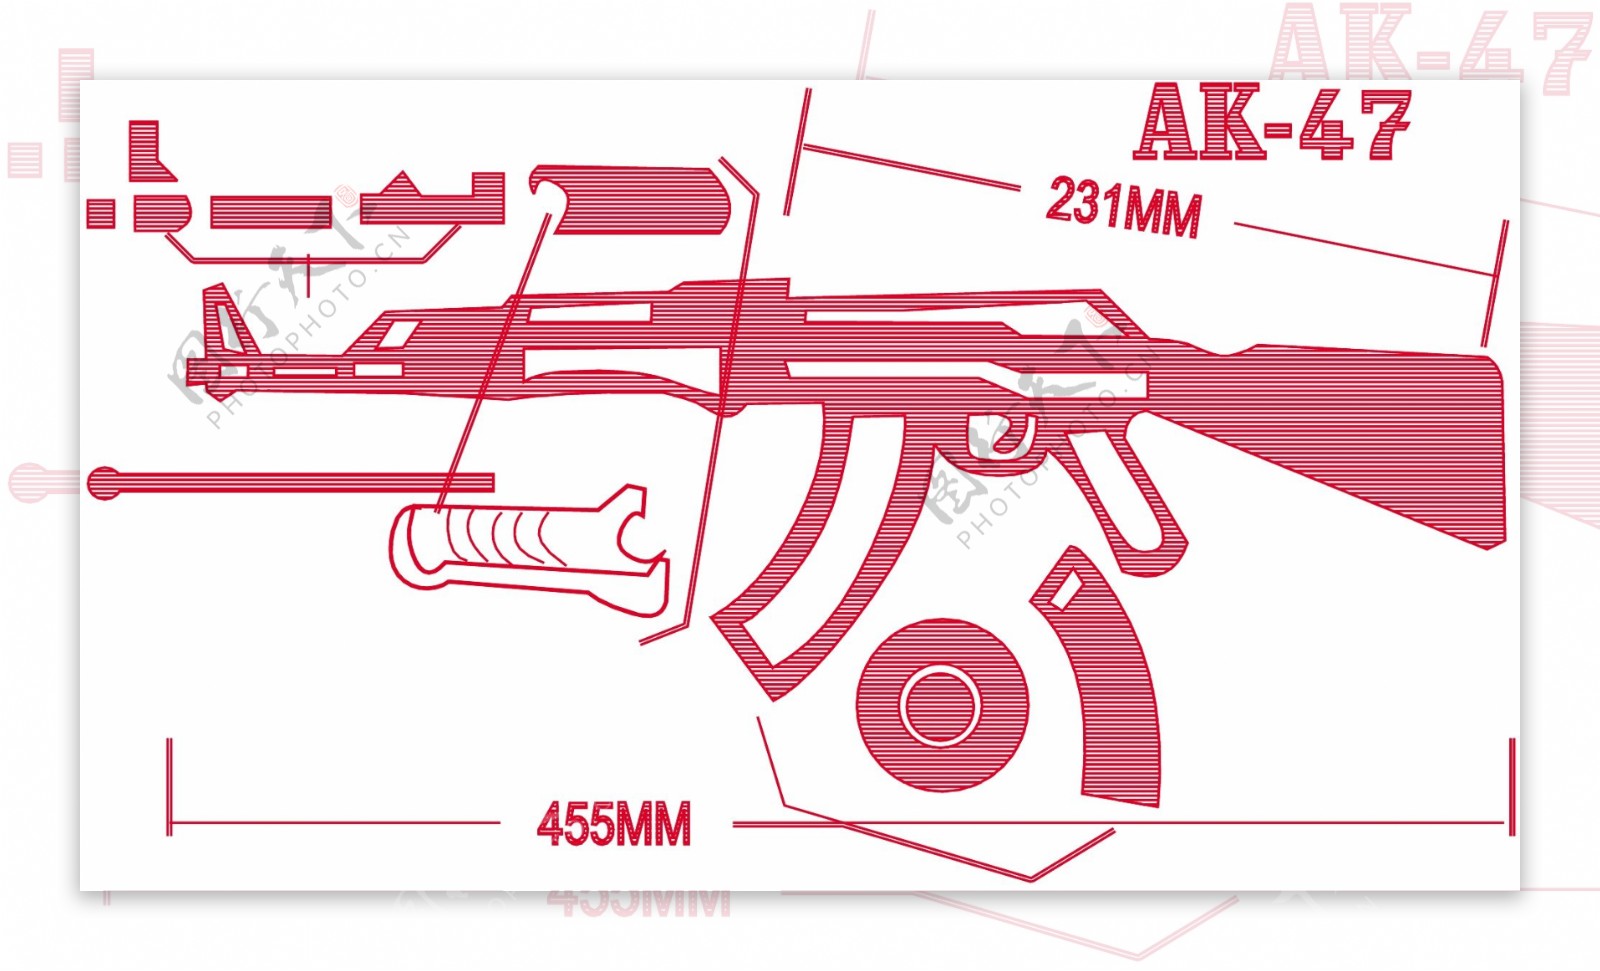 AK47矢量结构剖视图图片